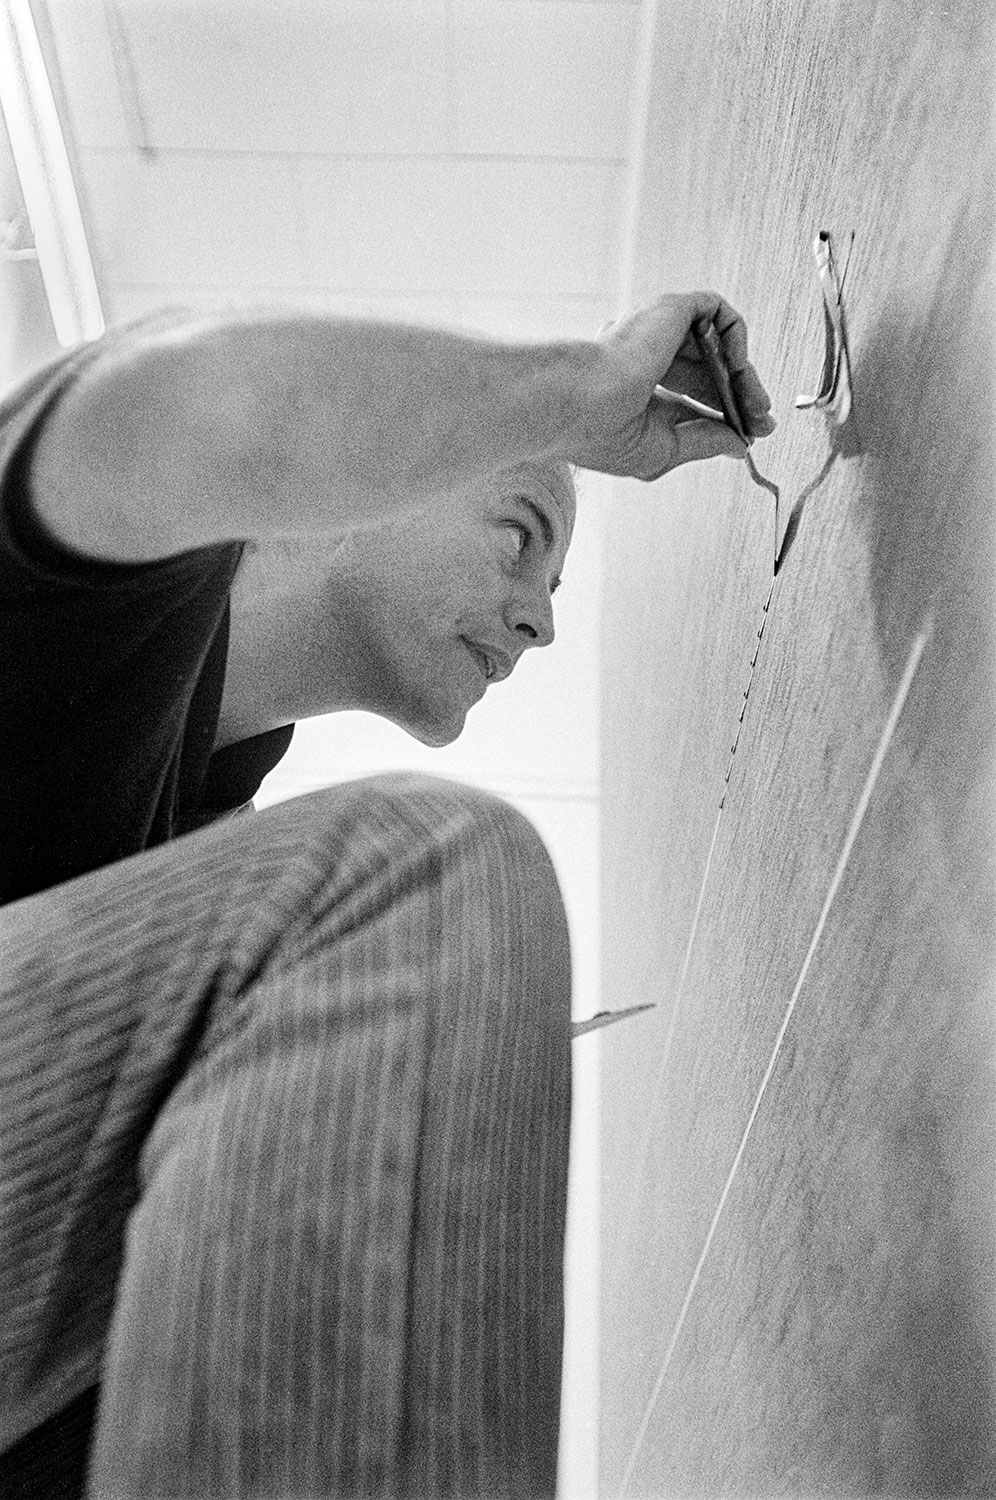  ROBERT IRWIN   Working on an early line painting, Venice, California, 1962    